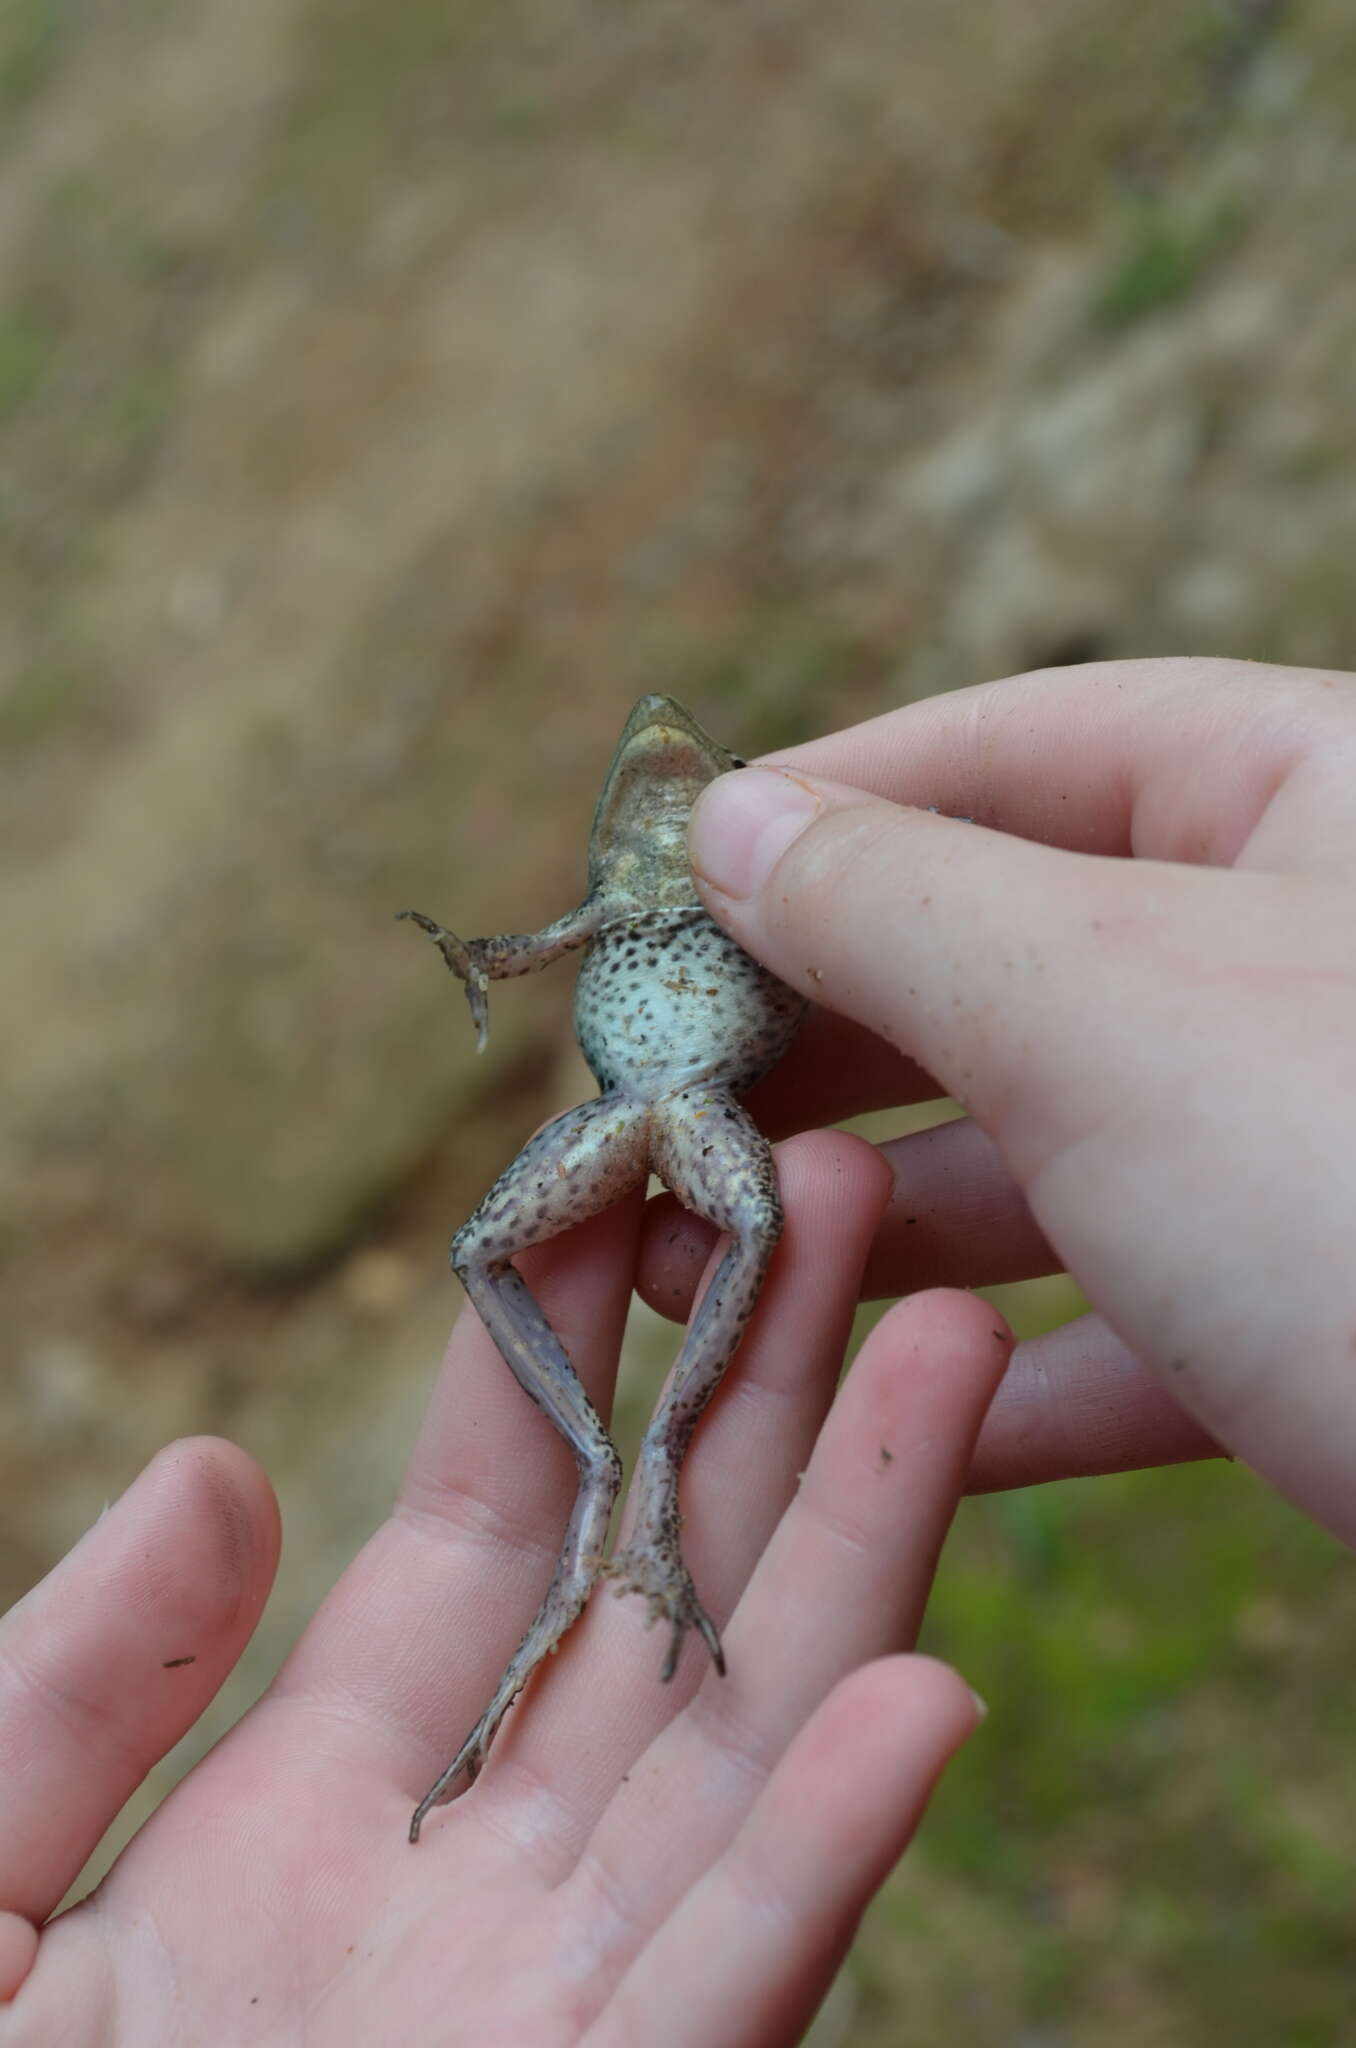 Image of Darling's frog